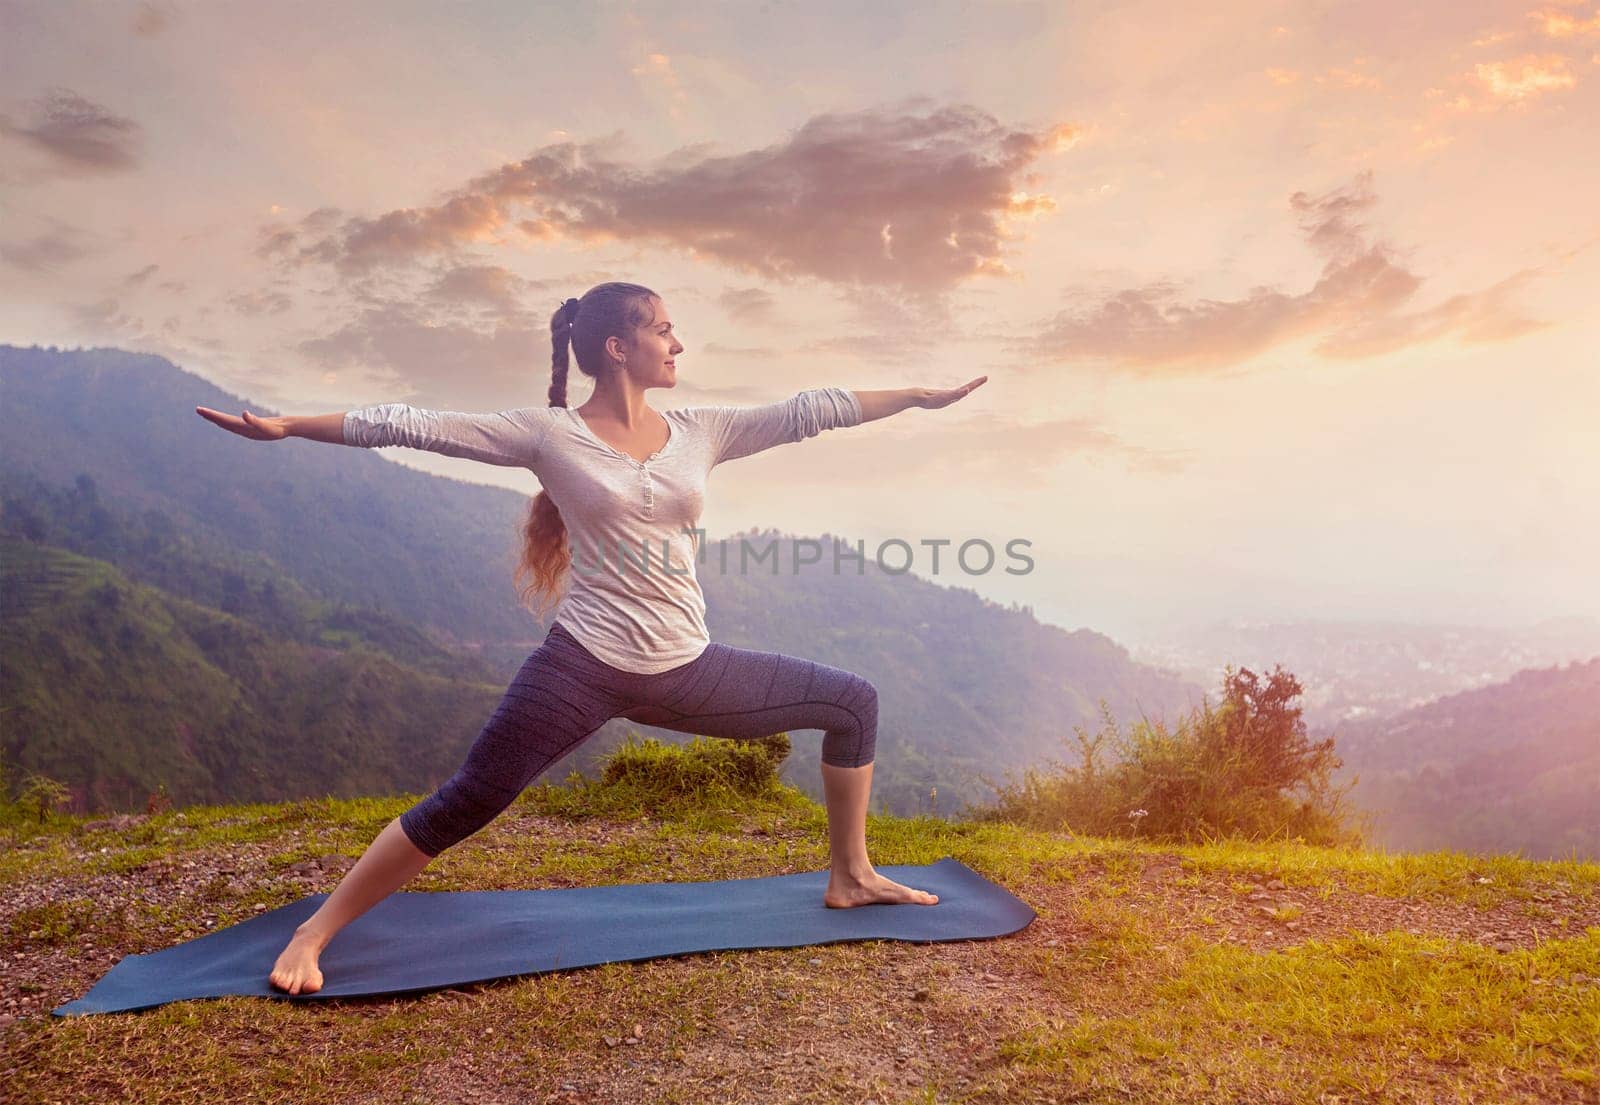 Yoga outdoors - sporty fit woman doing Ashtanga Vinyasa Yoga asana Virabhadrasana 2 Warrior pose posture in mountains